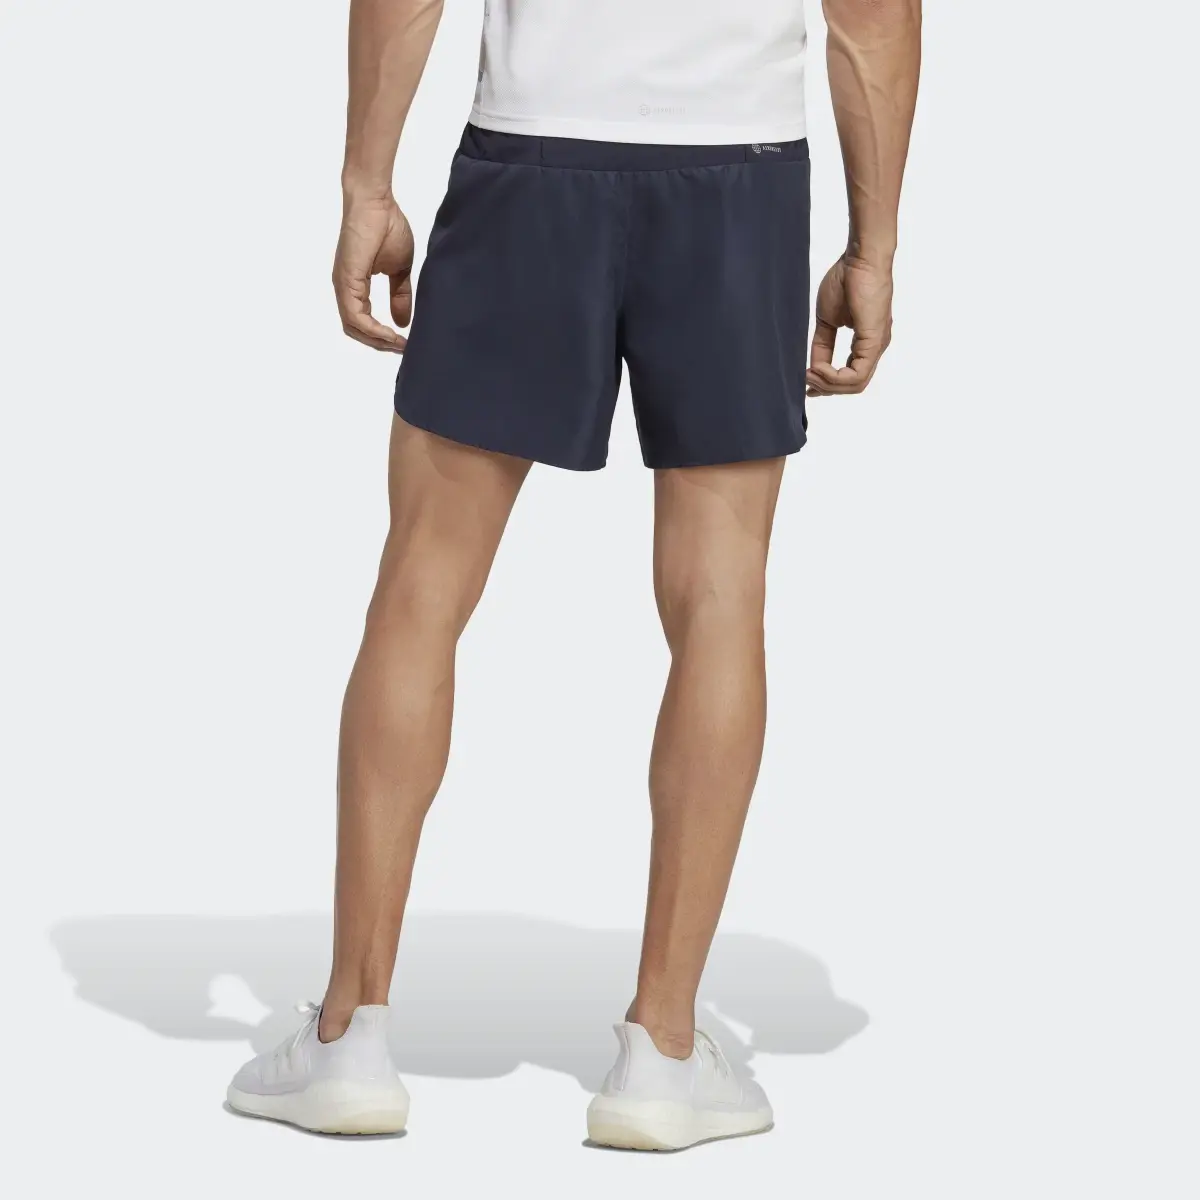 Adidas Designed for Running Engineered Shorts. 2